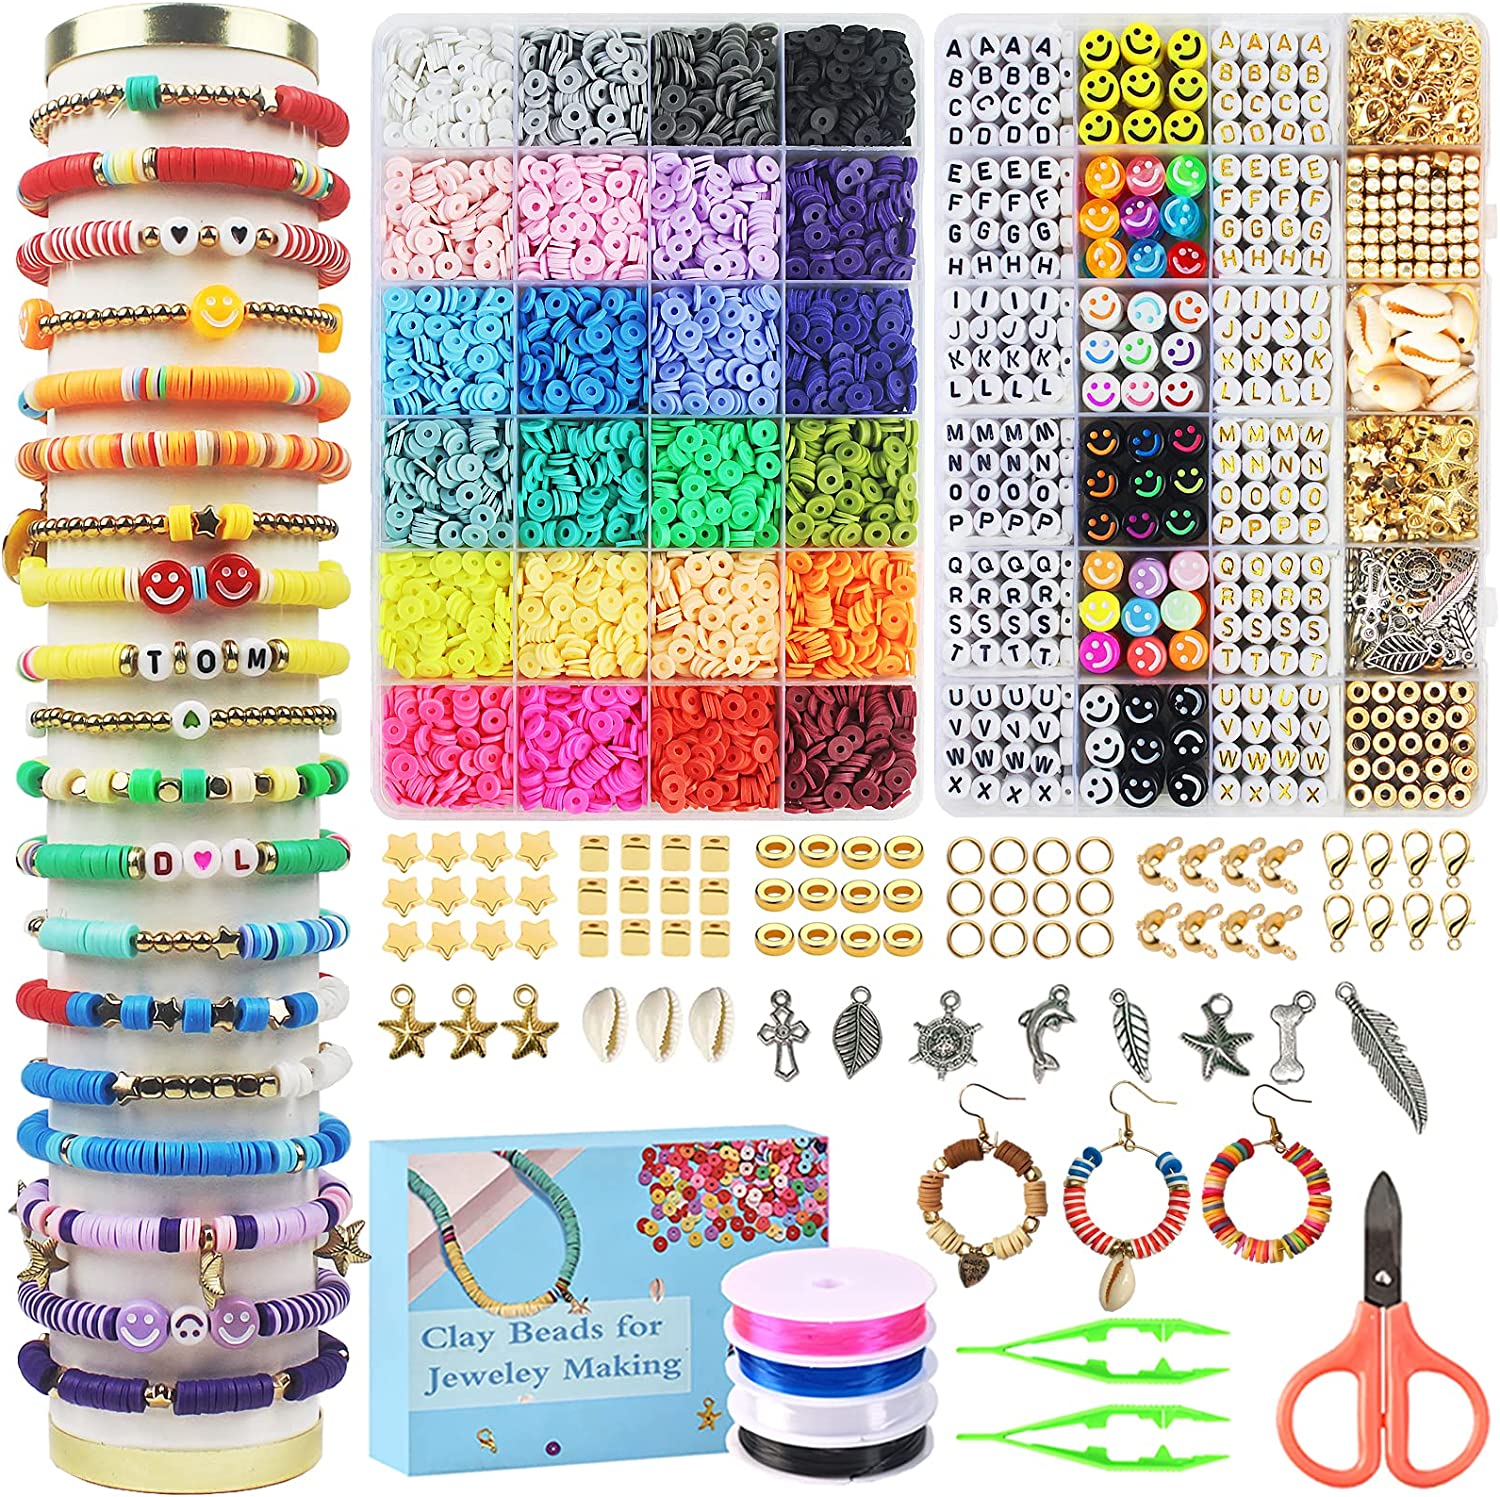 14,000Pcs Clay Beads Friendship Bracelet Making Kit, 48 Colors 3 Boxes with  Brac